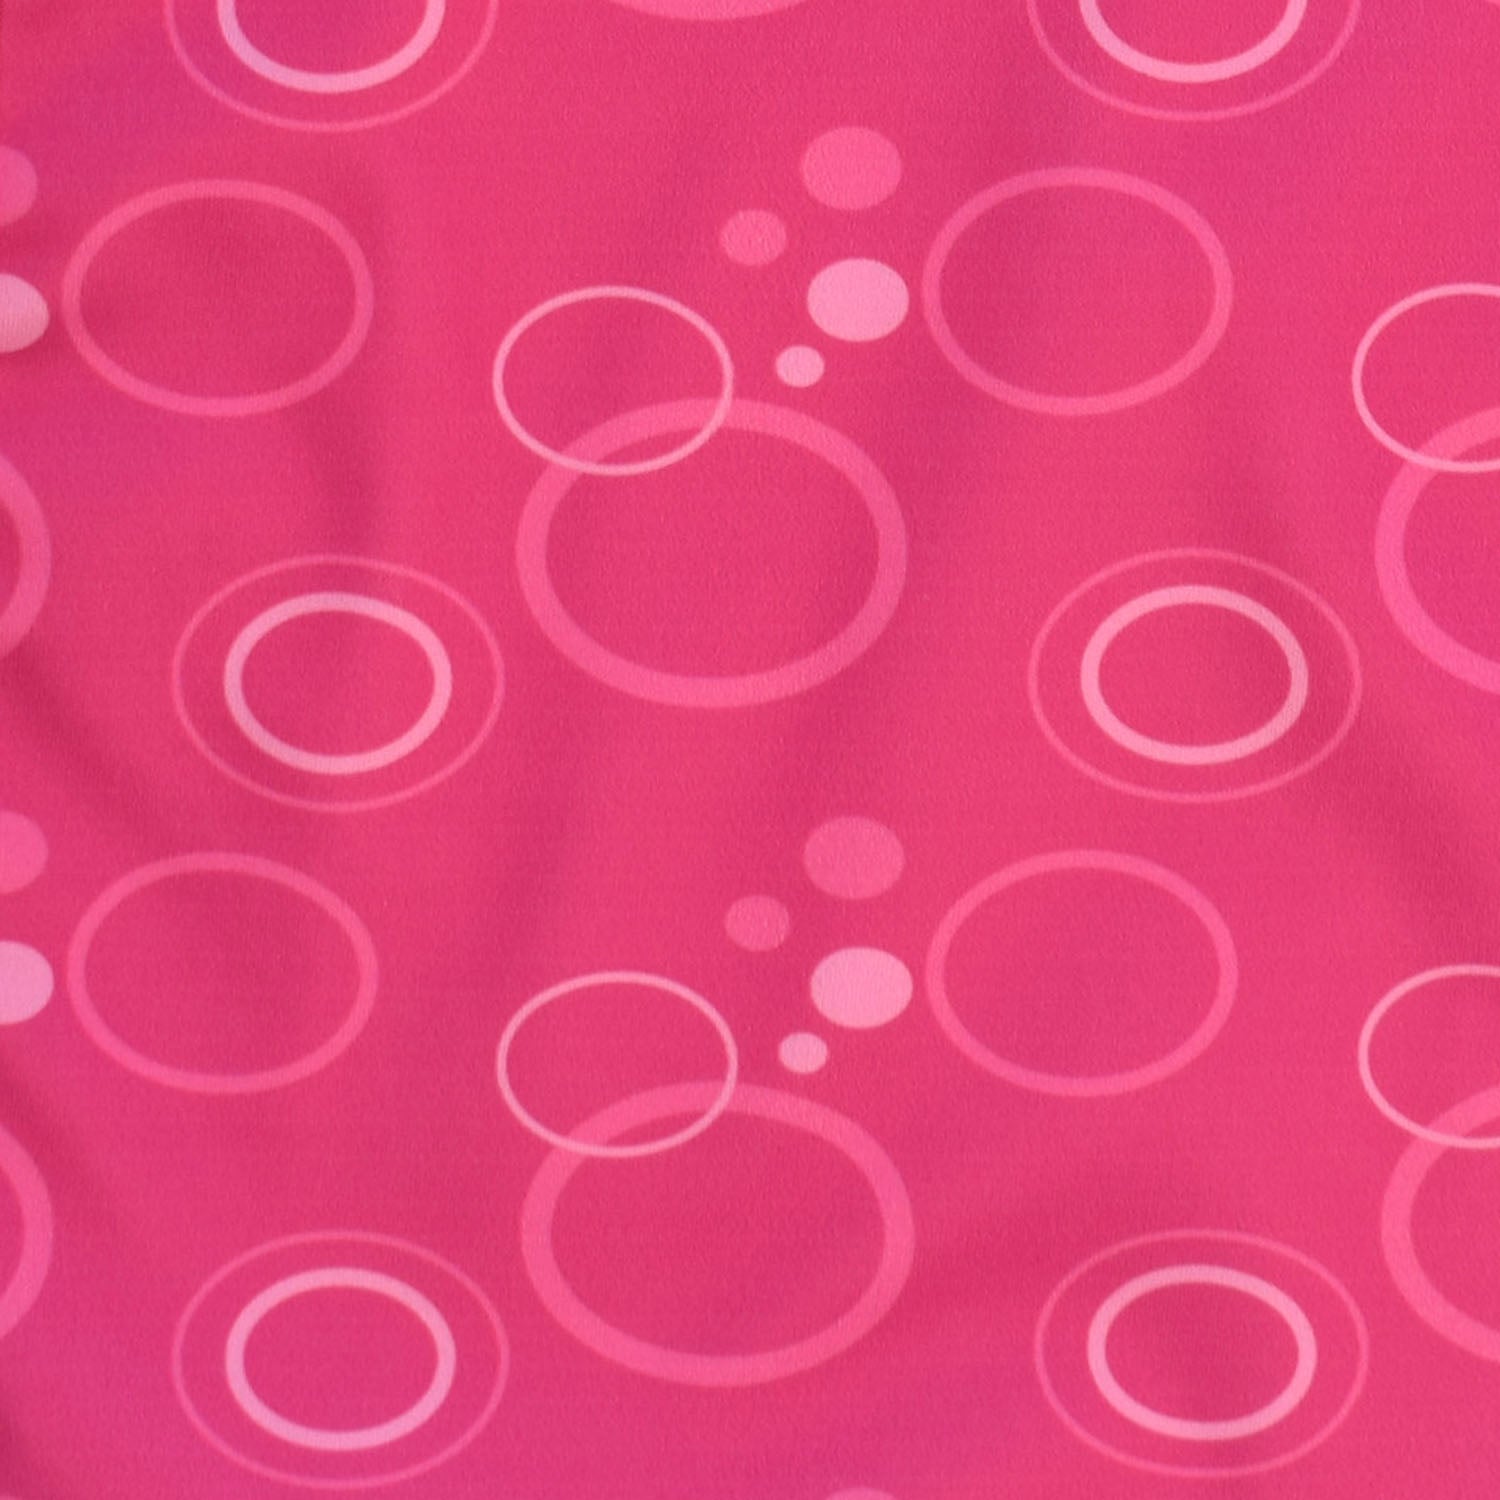 Junior Tabard Style Bib - Pink bubbles pattern